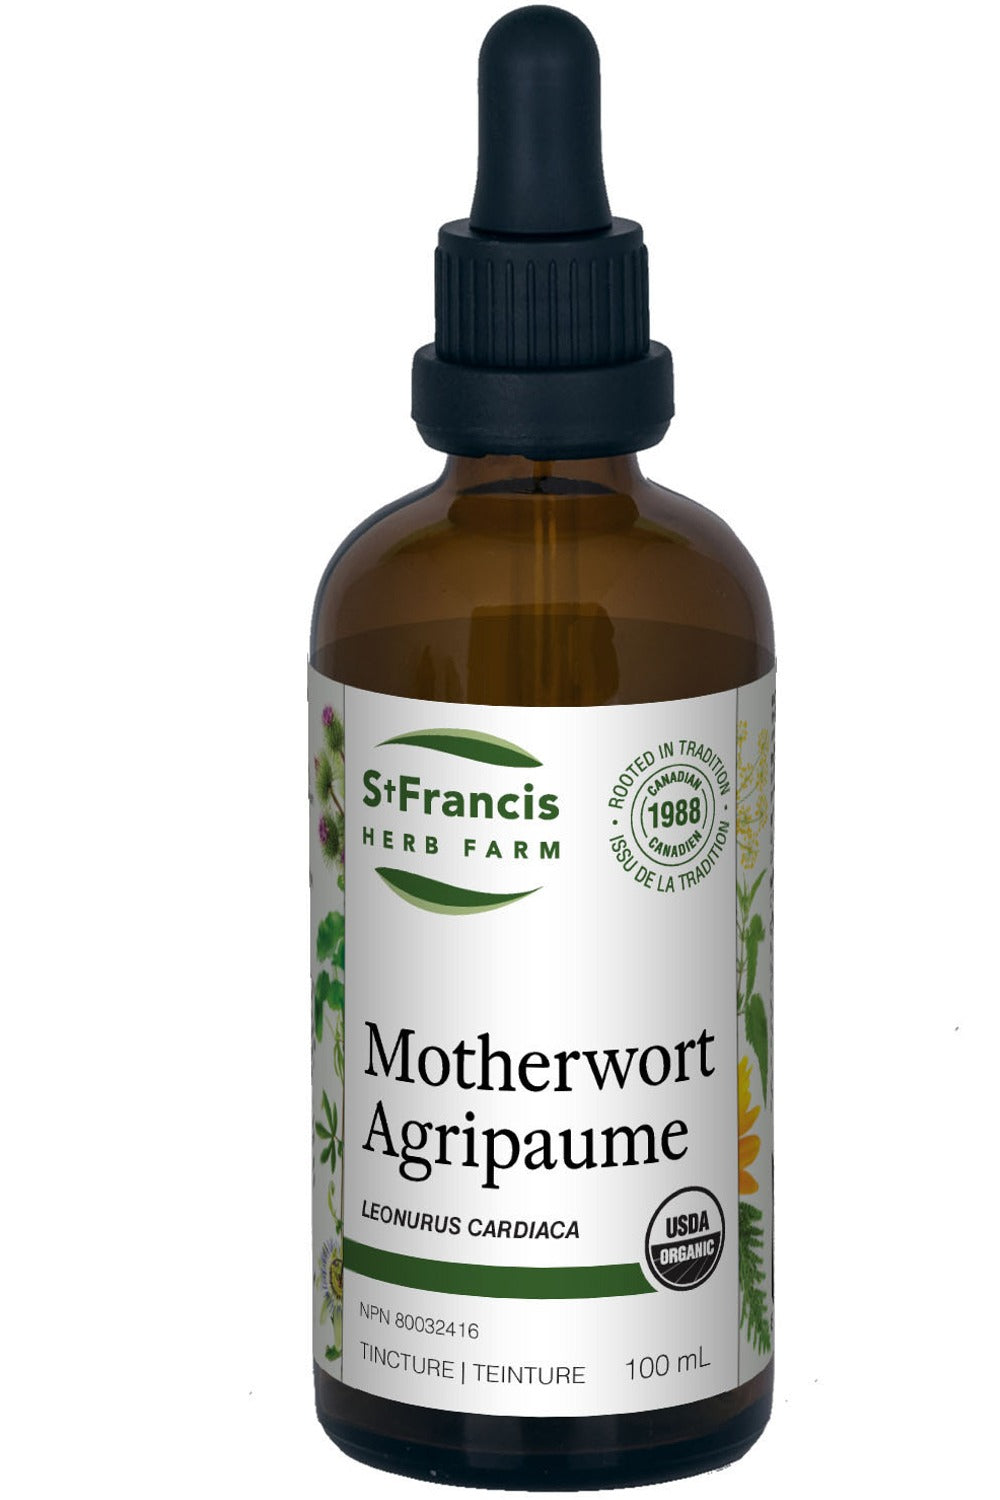 ST FRANCIS HERB FARM Motherwort (100 ml)